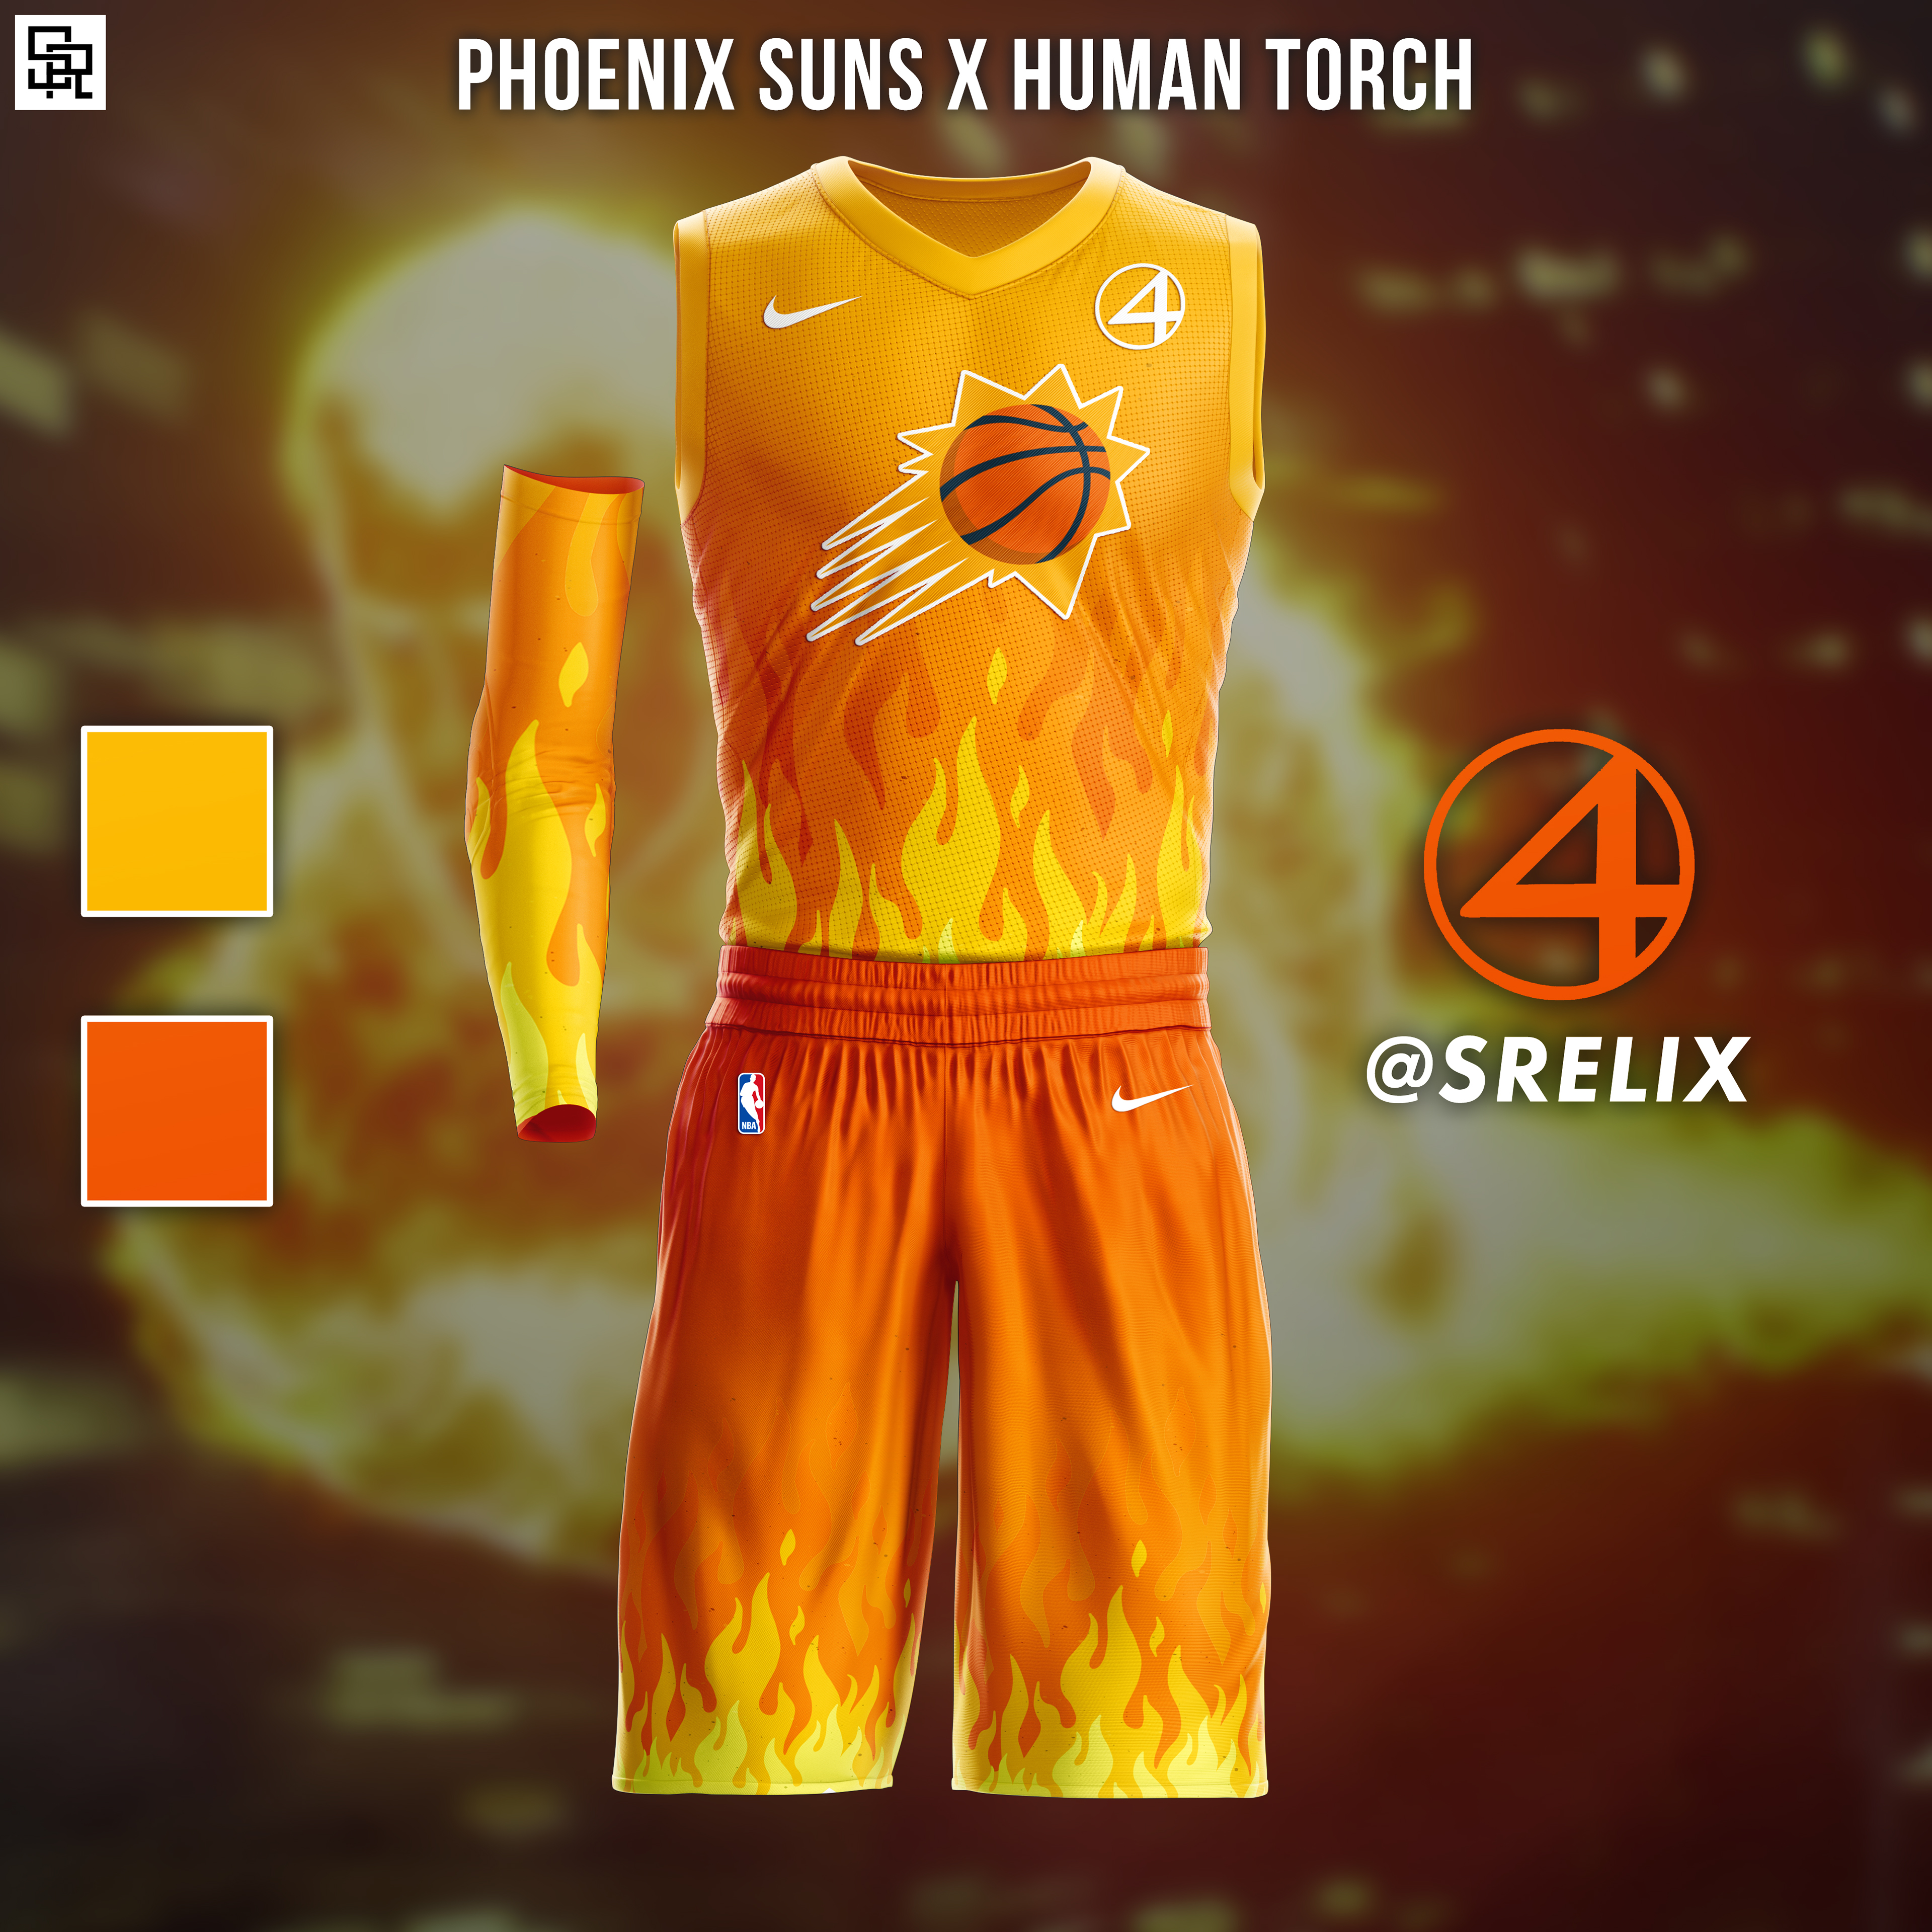 design nba yellow basketball jersey